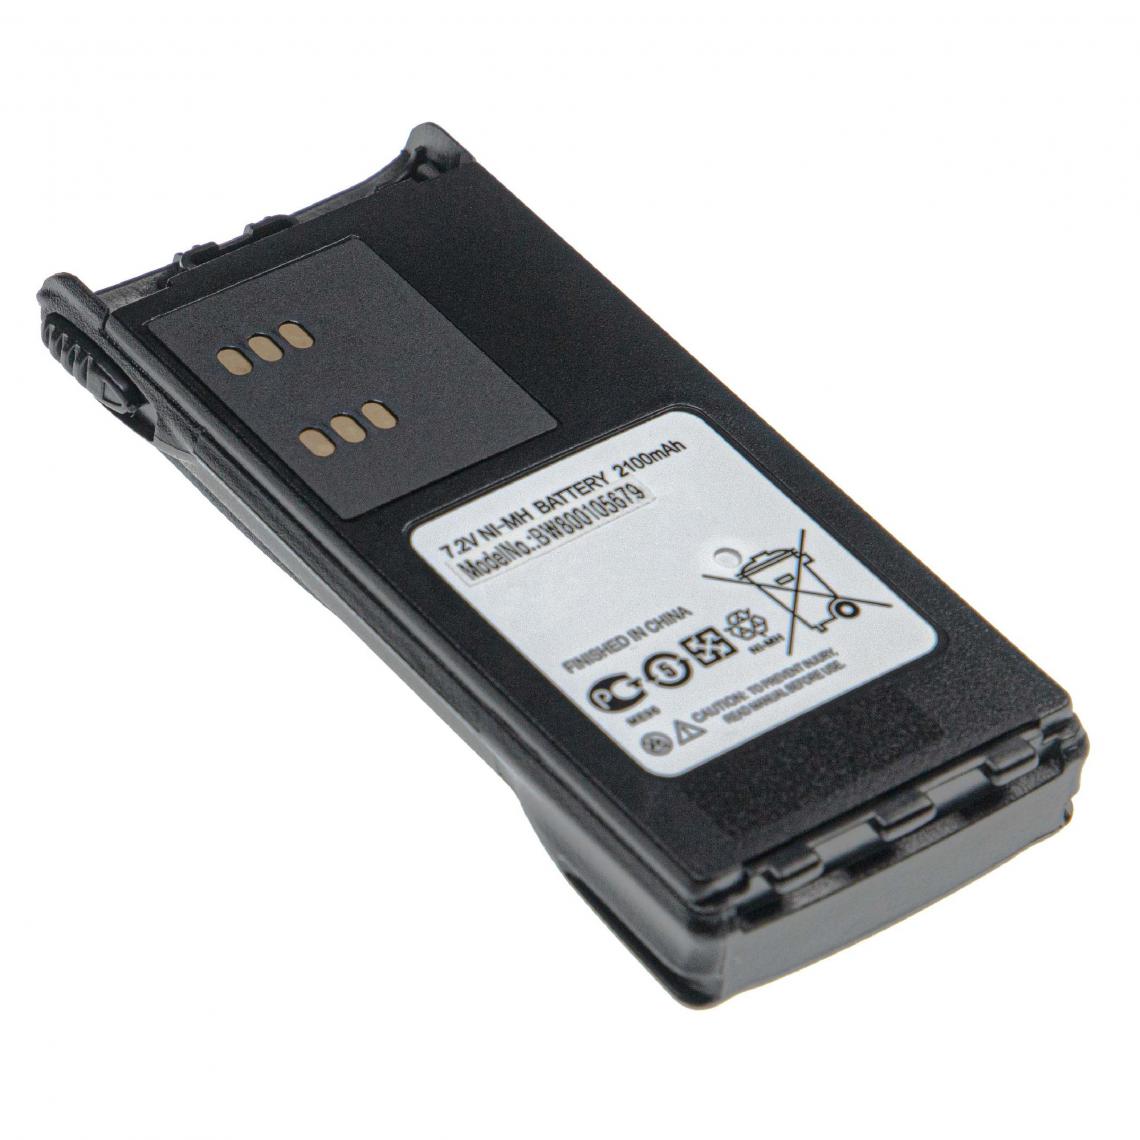 Vhbw - vhbw Batterie compatible avec Motorola HT1250.LS+, HT1250-LS, HT1250-LS+, HT1500, HT1550 radio talkie-walkie (2100mAh, 7,2V, NiMH) - Autres accessoires smartphone